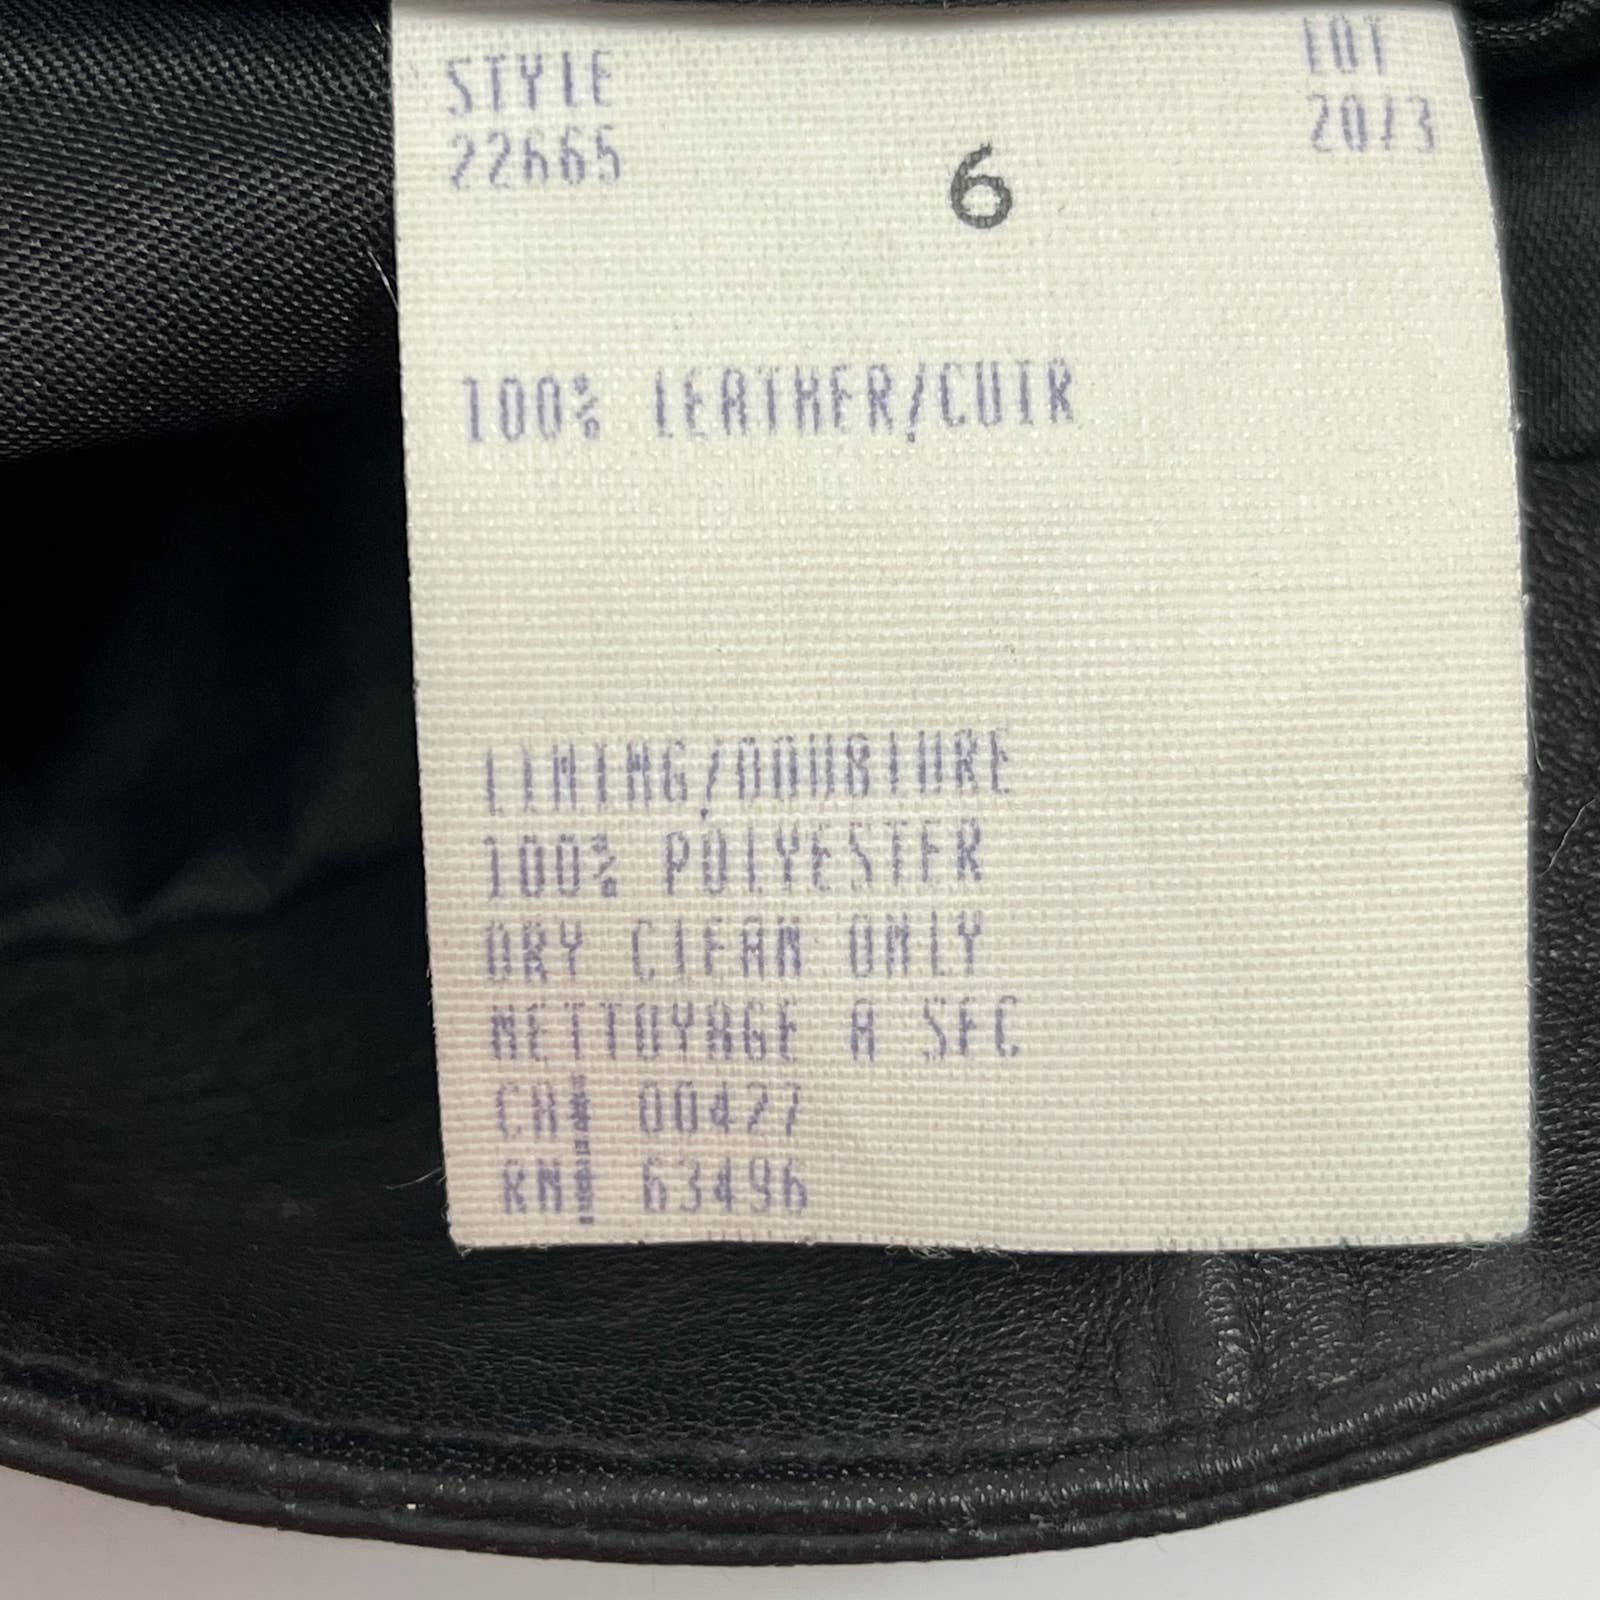 Affordable Margaret Godfrey Leather Skirt Size 6 Black PK98JG3eG Outlet Store